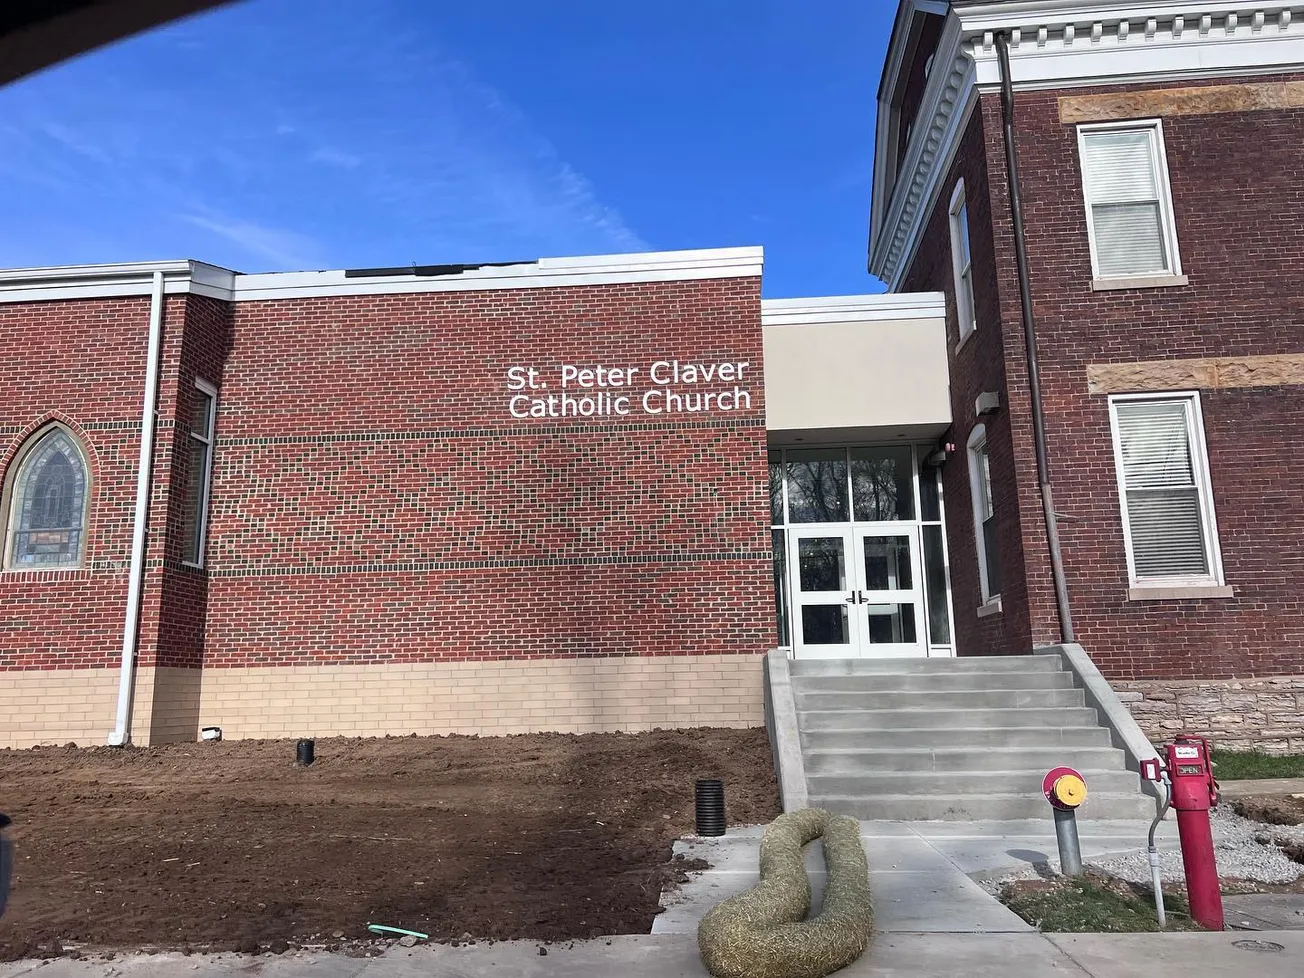 St. Peter Claver Catholic Church in Lexington to dedicate new building April 16